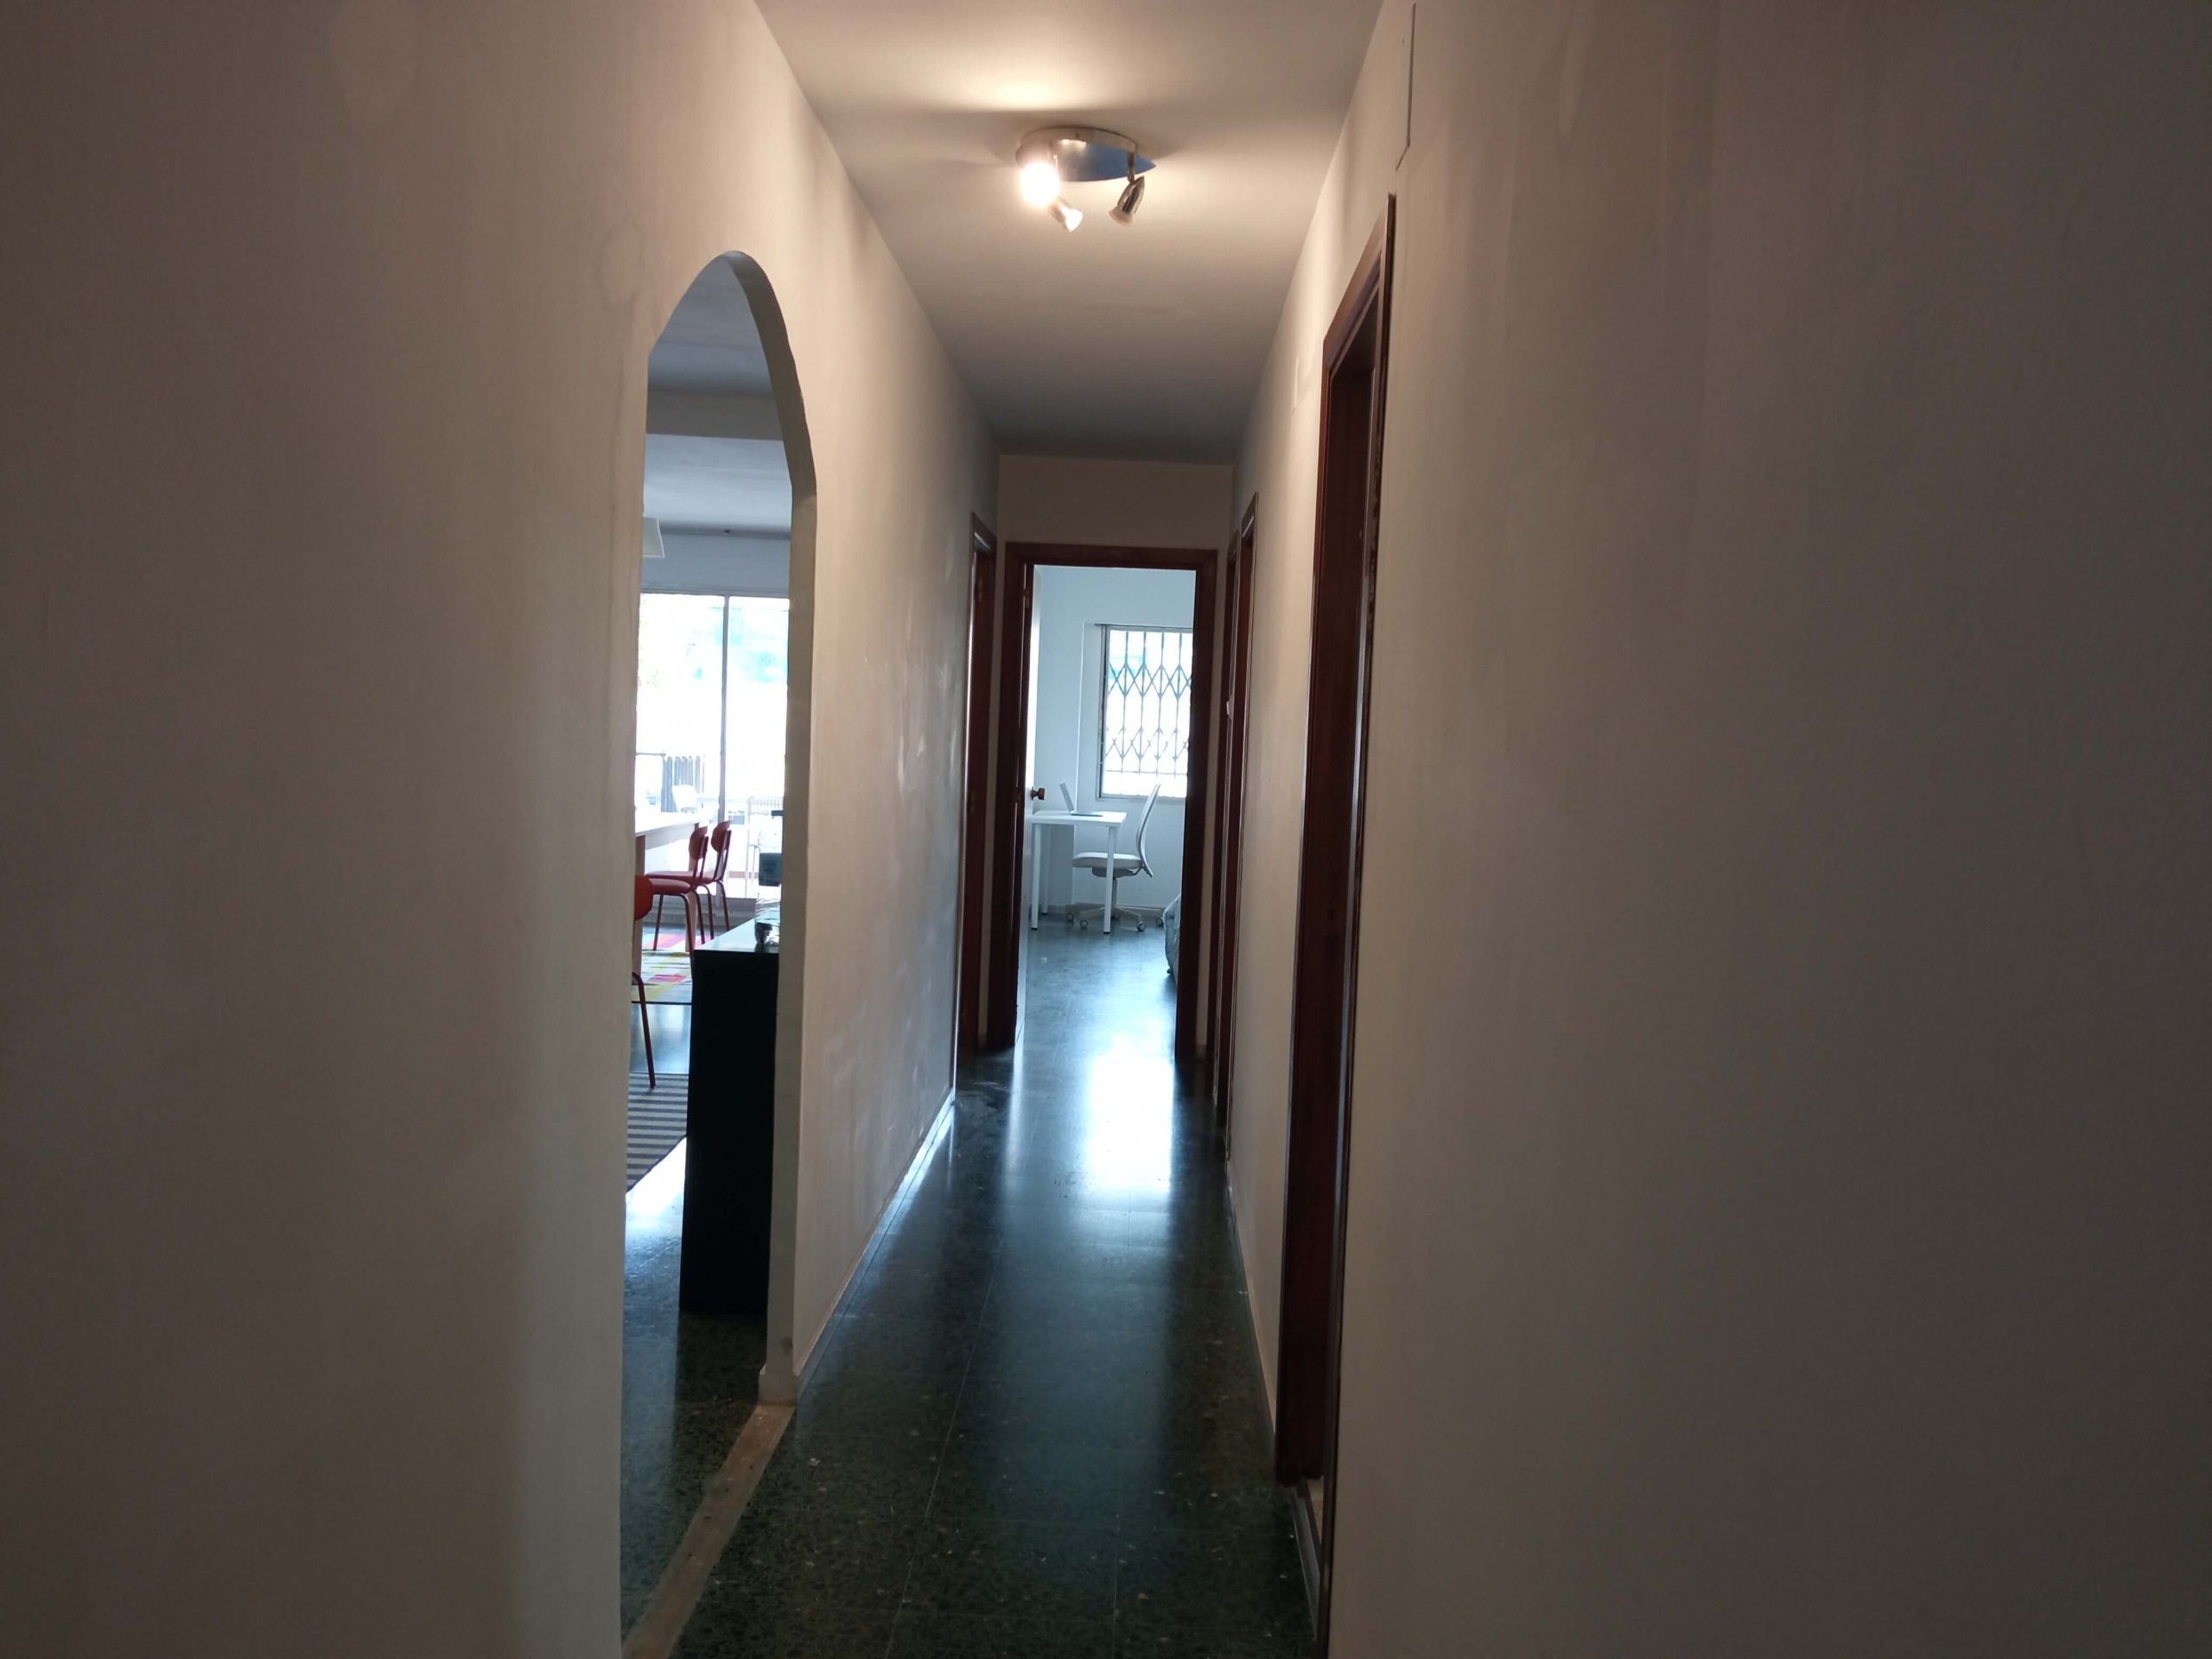 Corridor apartment for rent in valencia, guillen